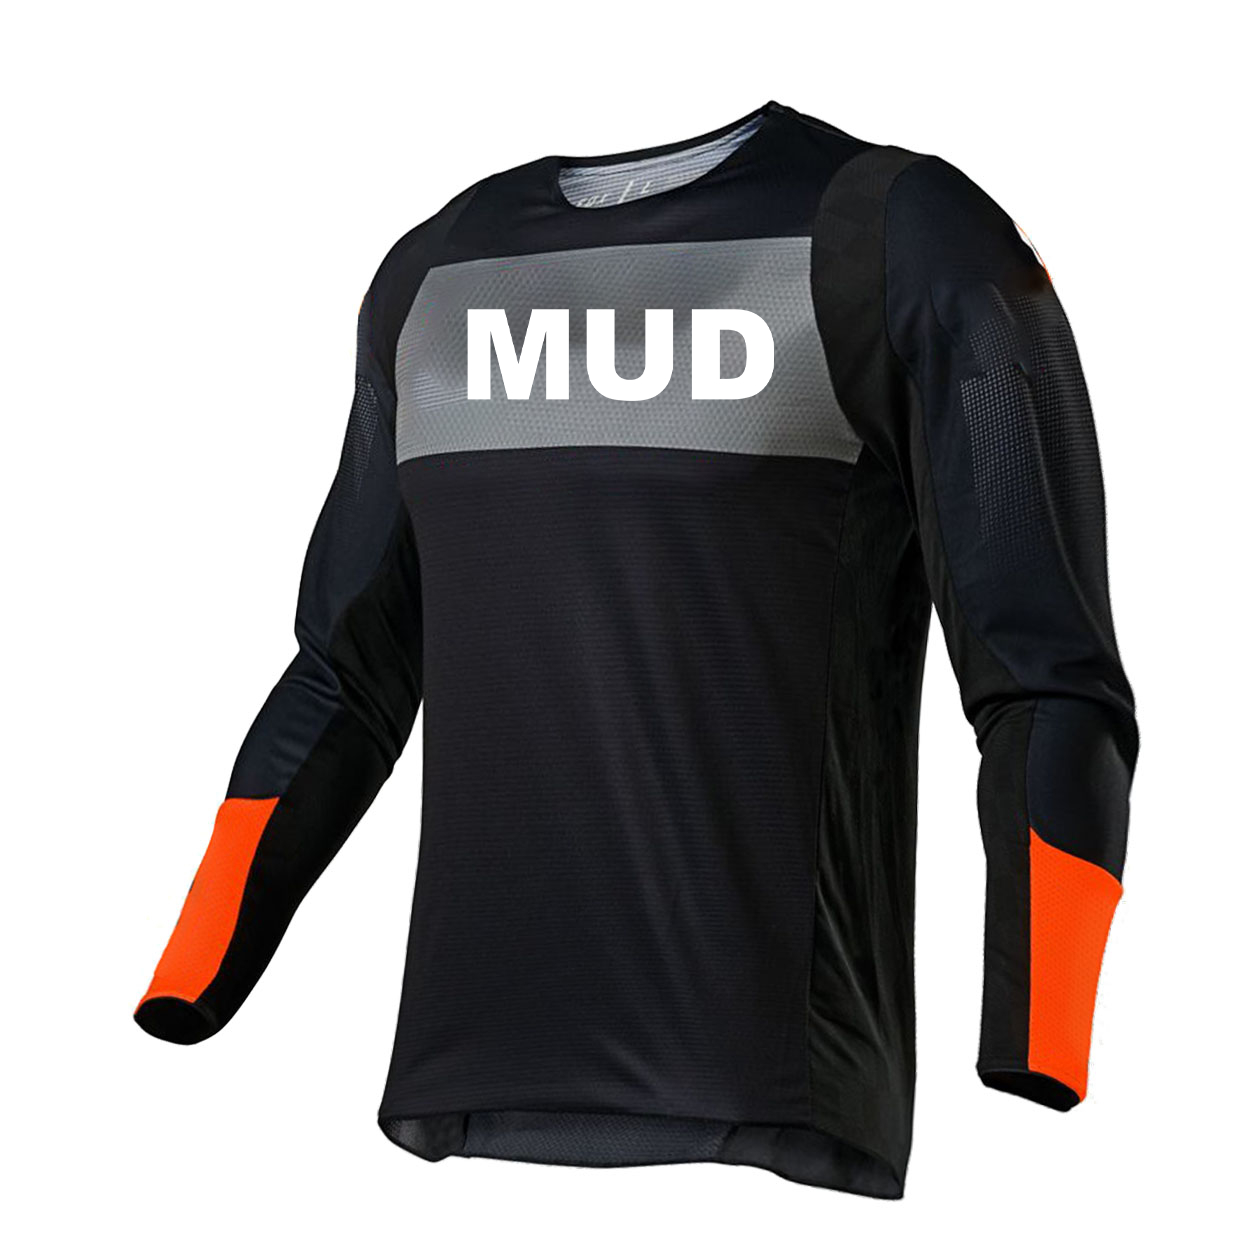 Mud Brand Logo Classic Performance Jersey Long Sleeve Shirt Black/Gray/Orange